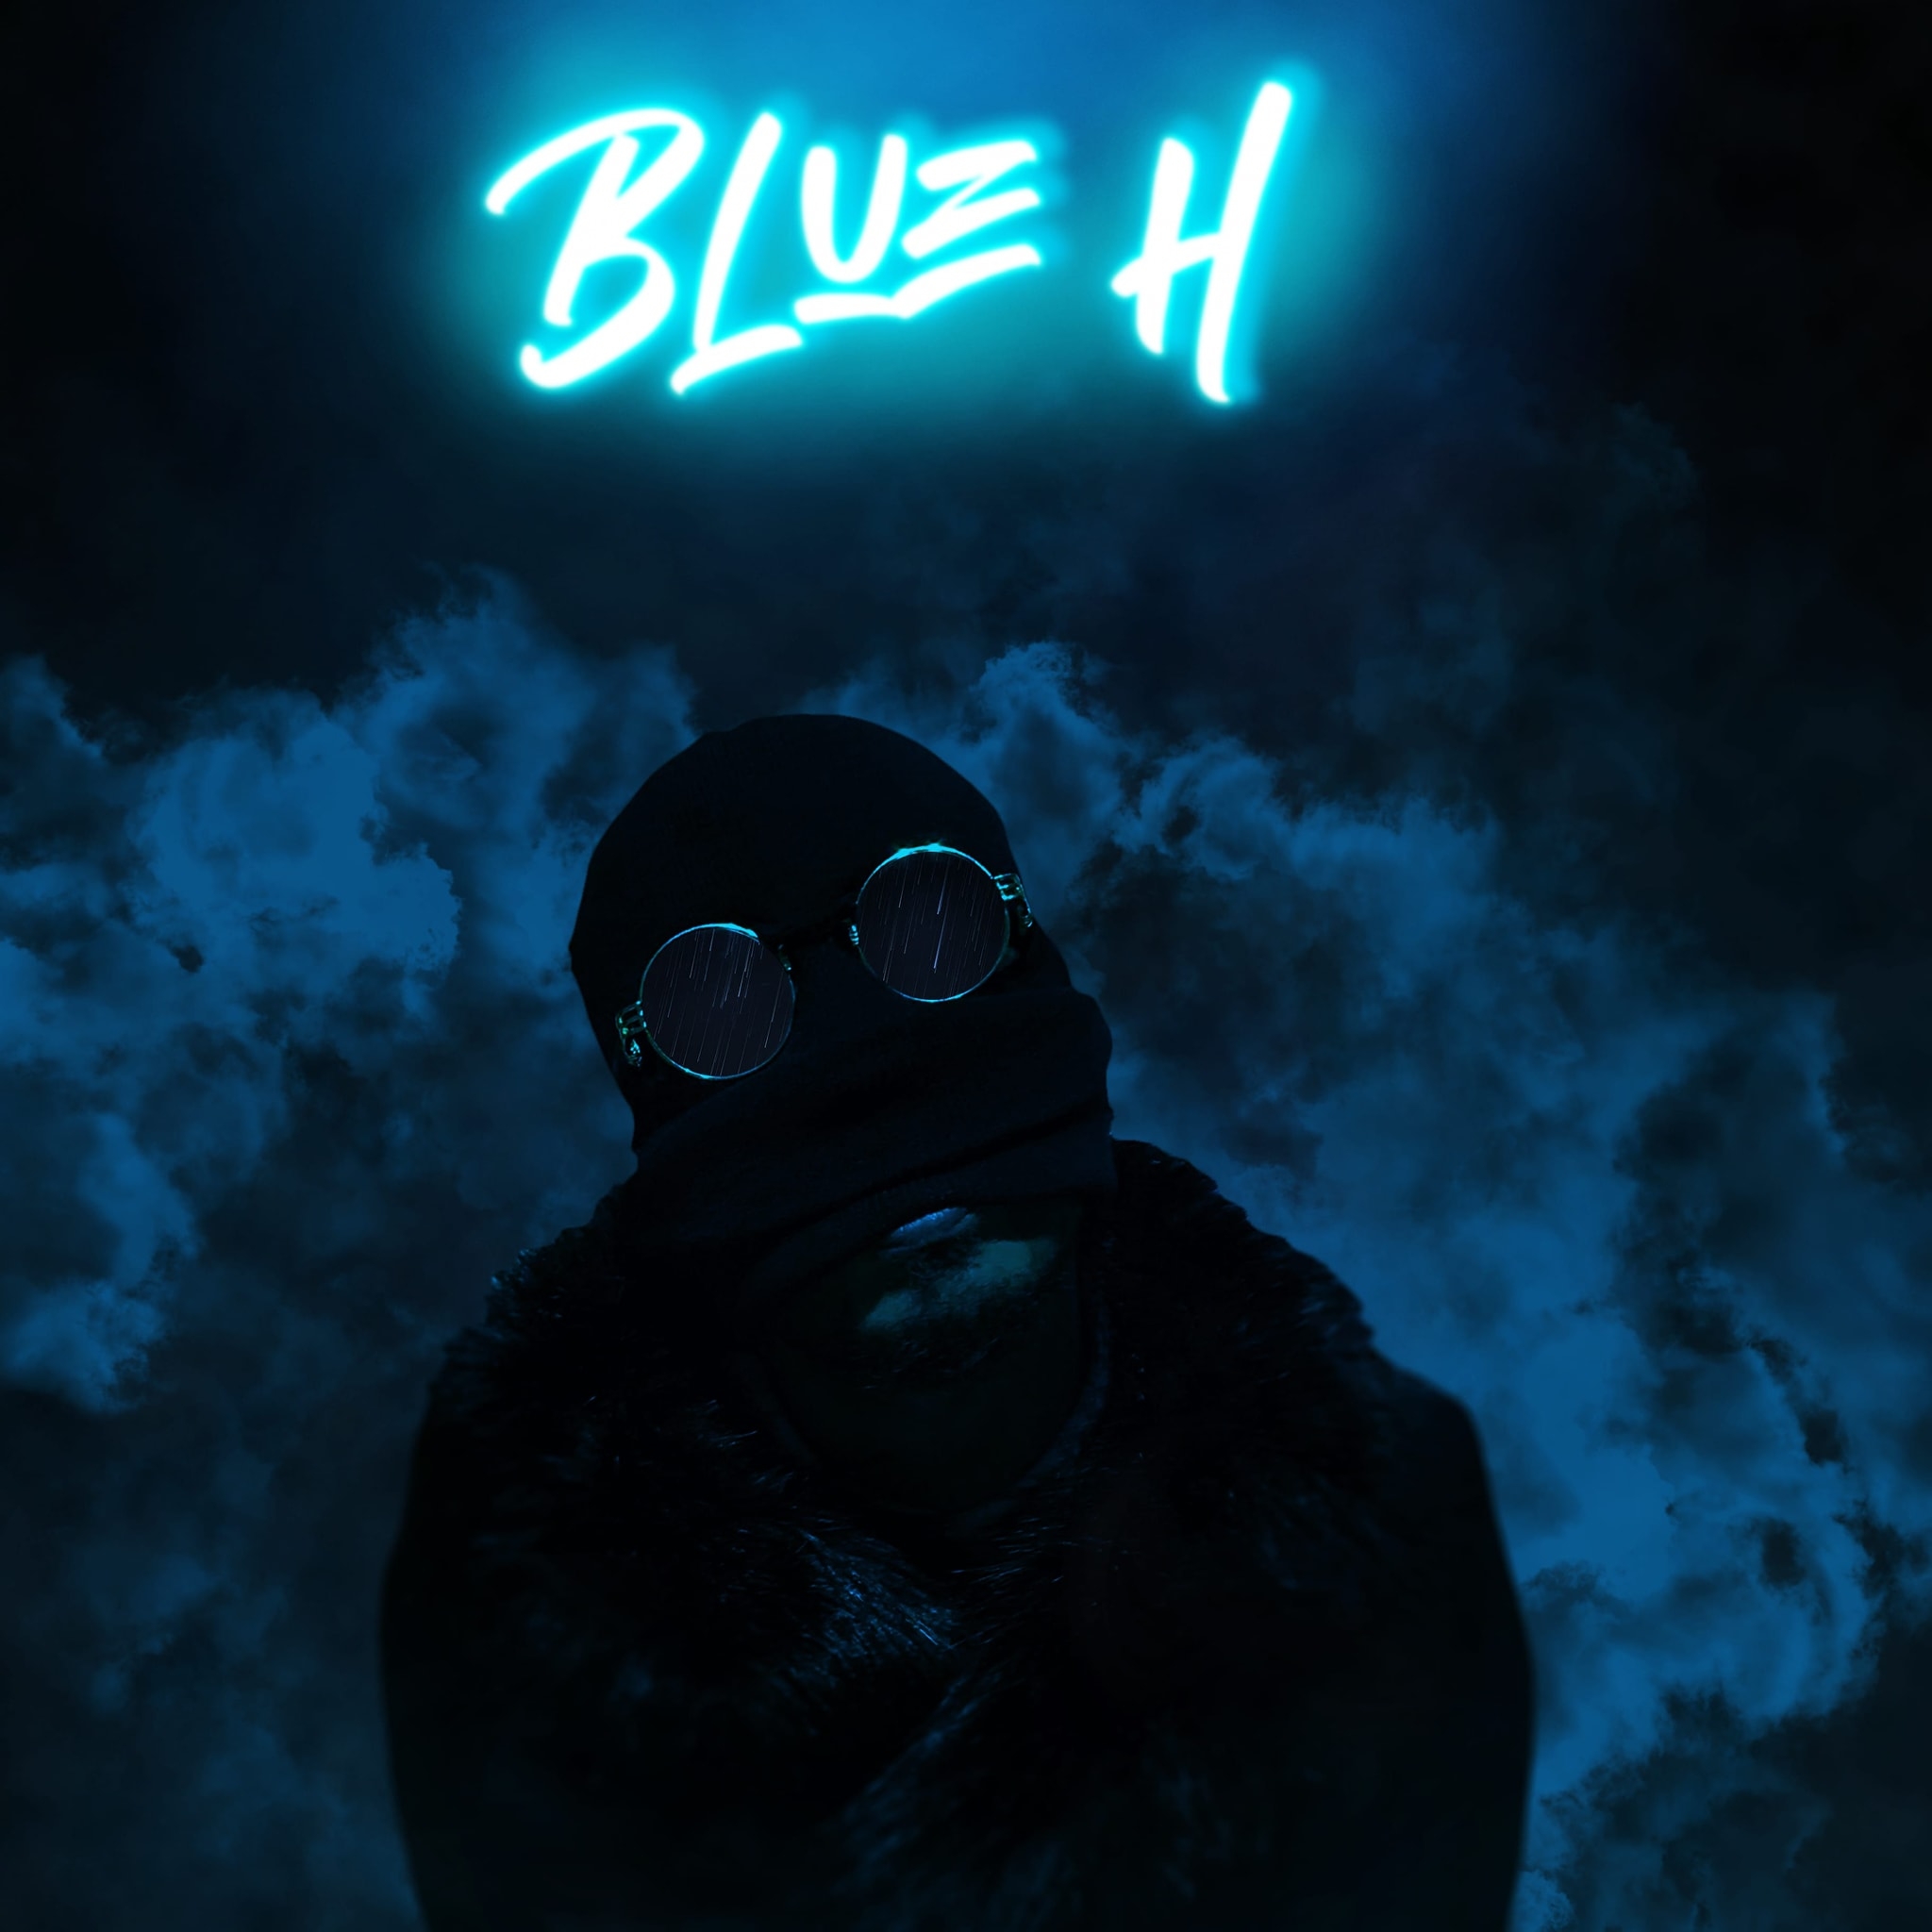 BLUE H